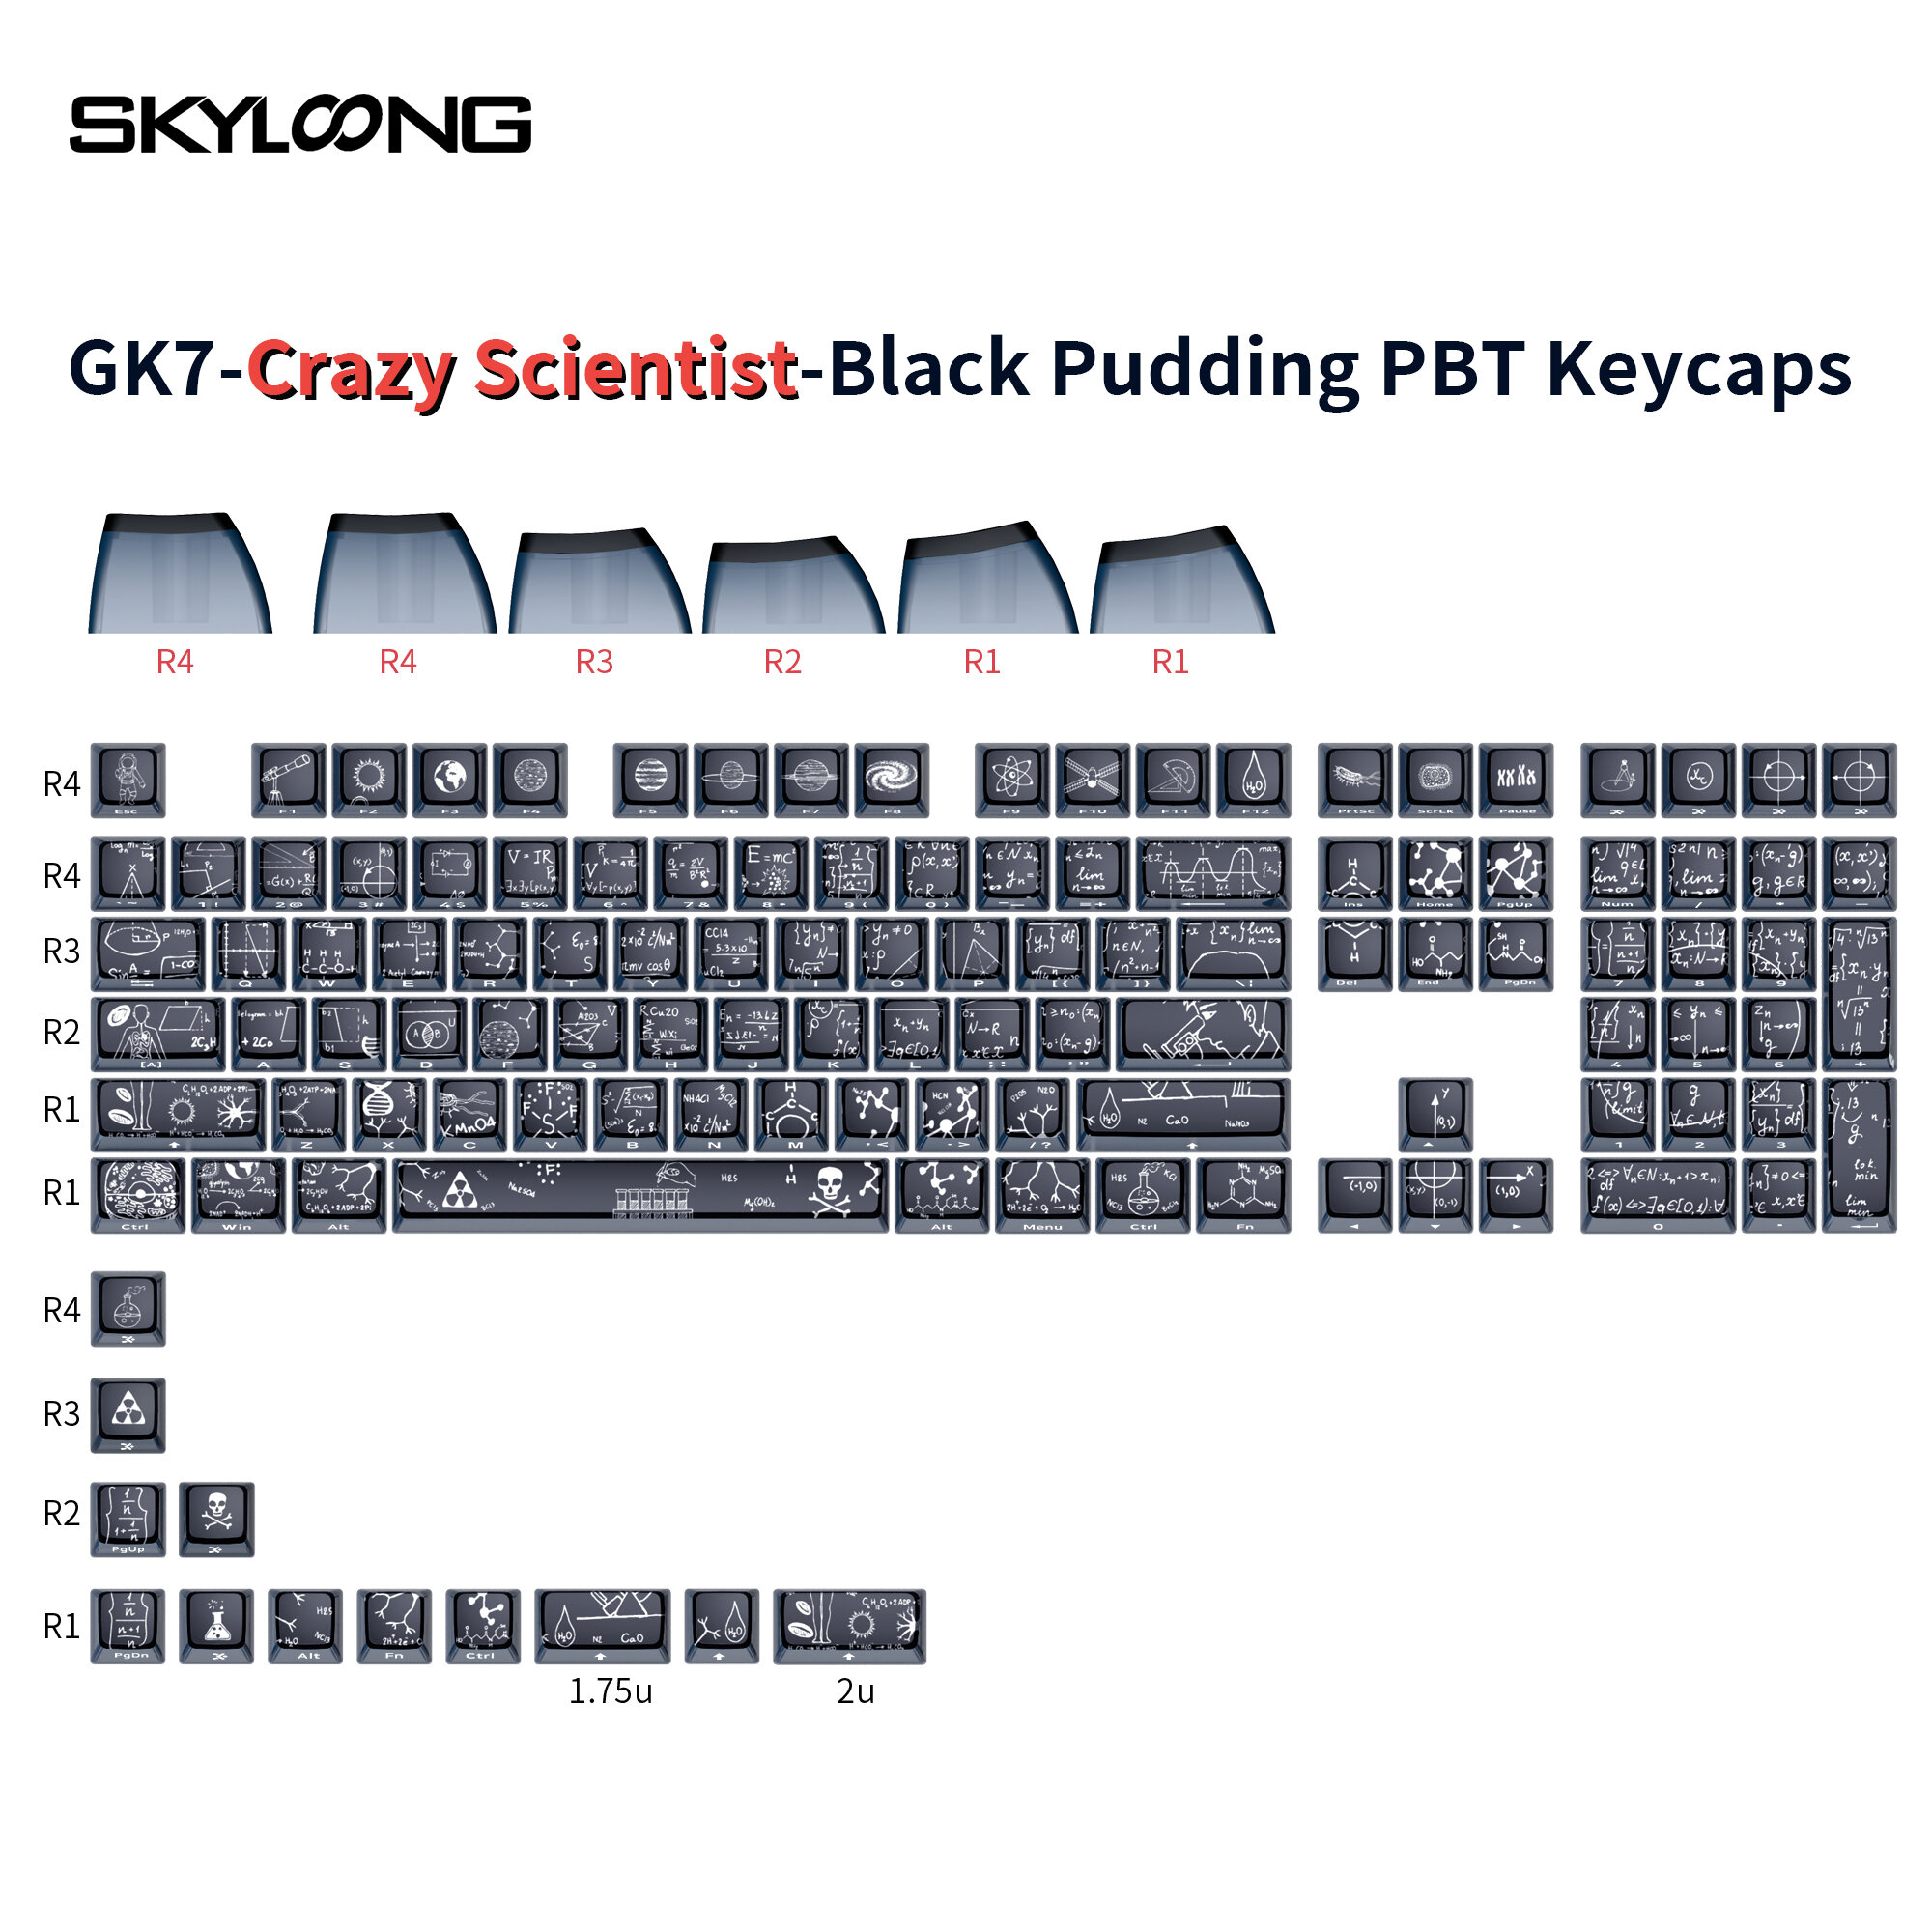 

SKYLOONG GK7 120 Keys Black Jelly Keycap Set Crazy Scientist PBT Custom Keycap for Gaming Mechanical Keyboards